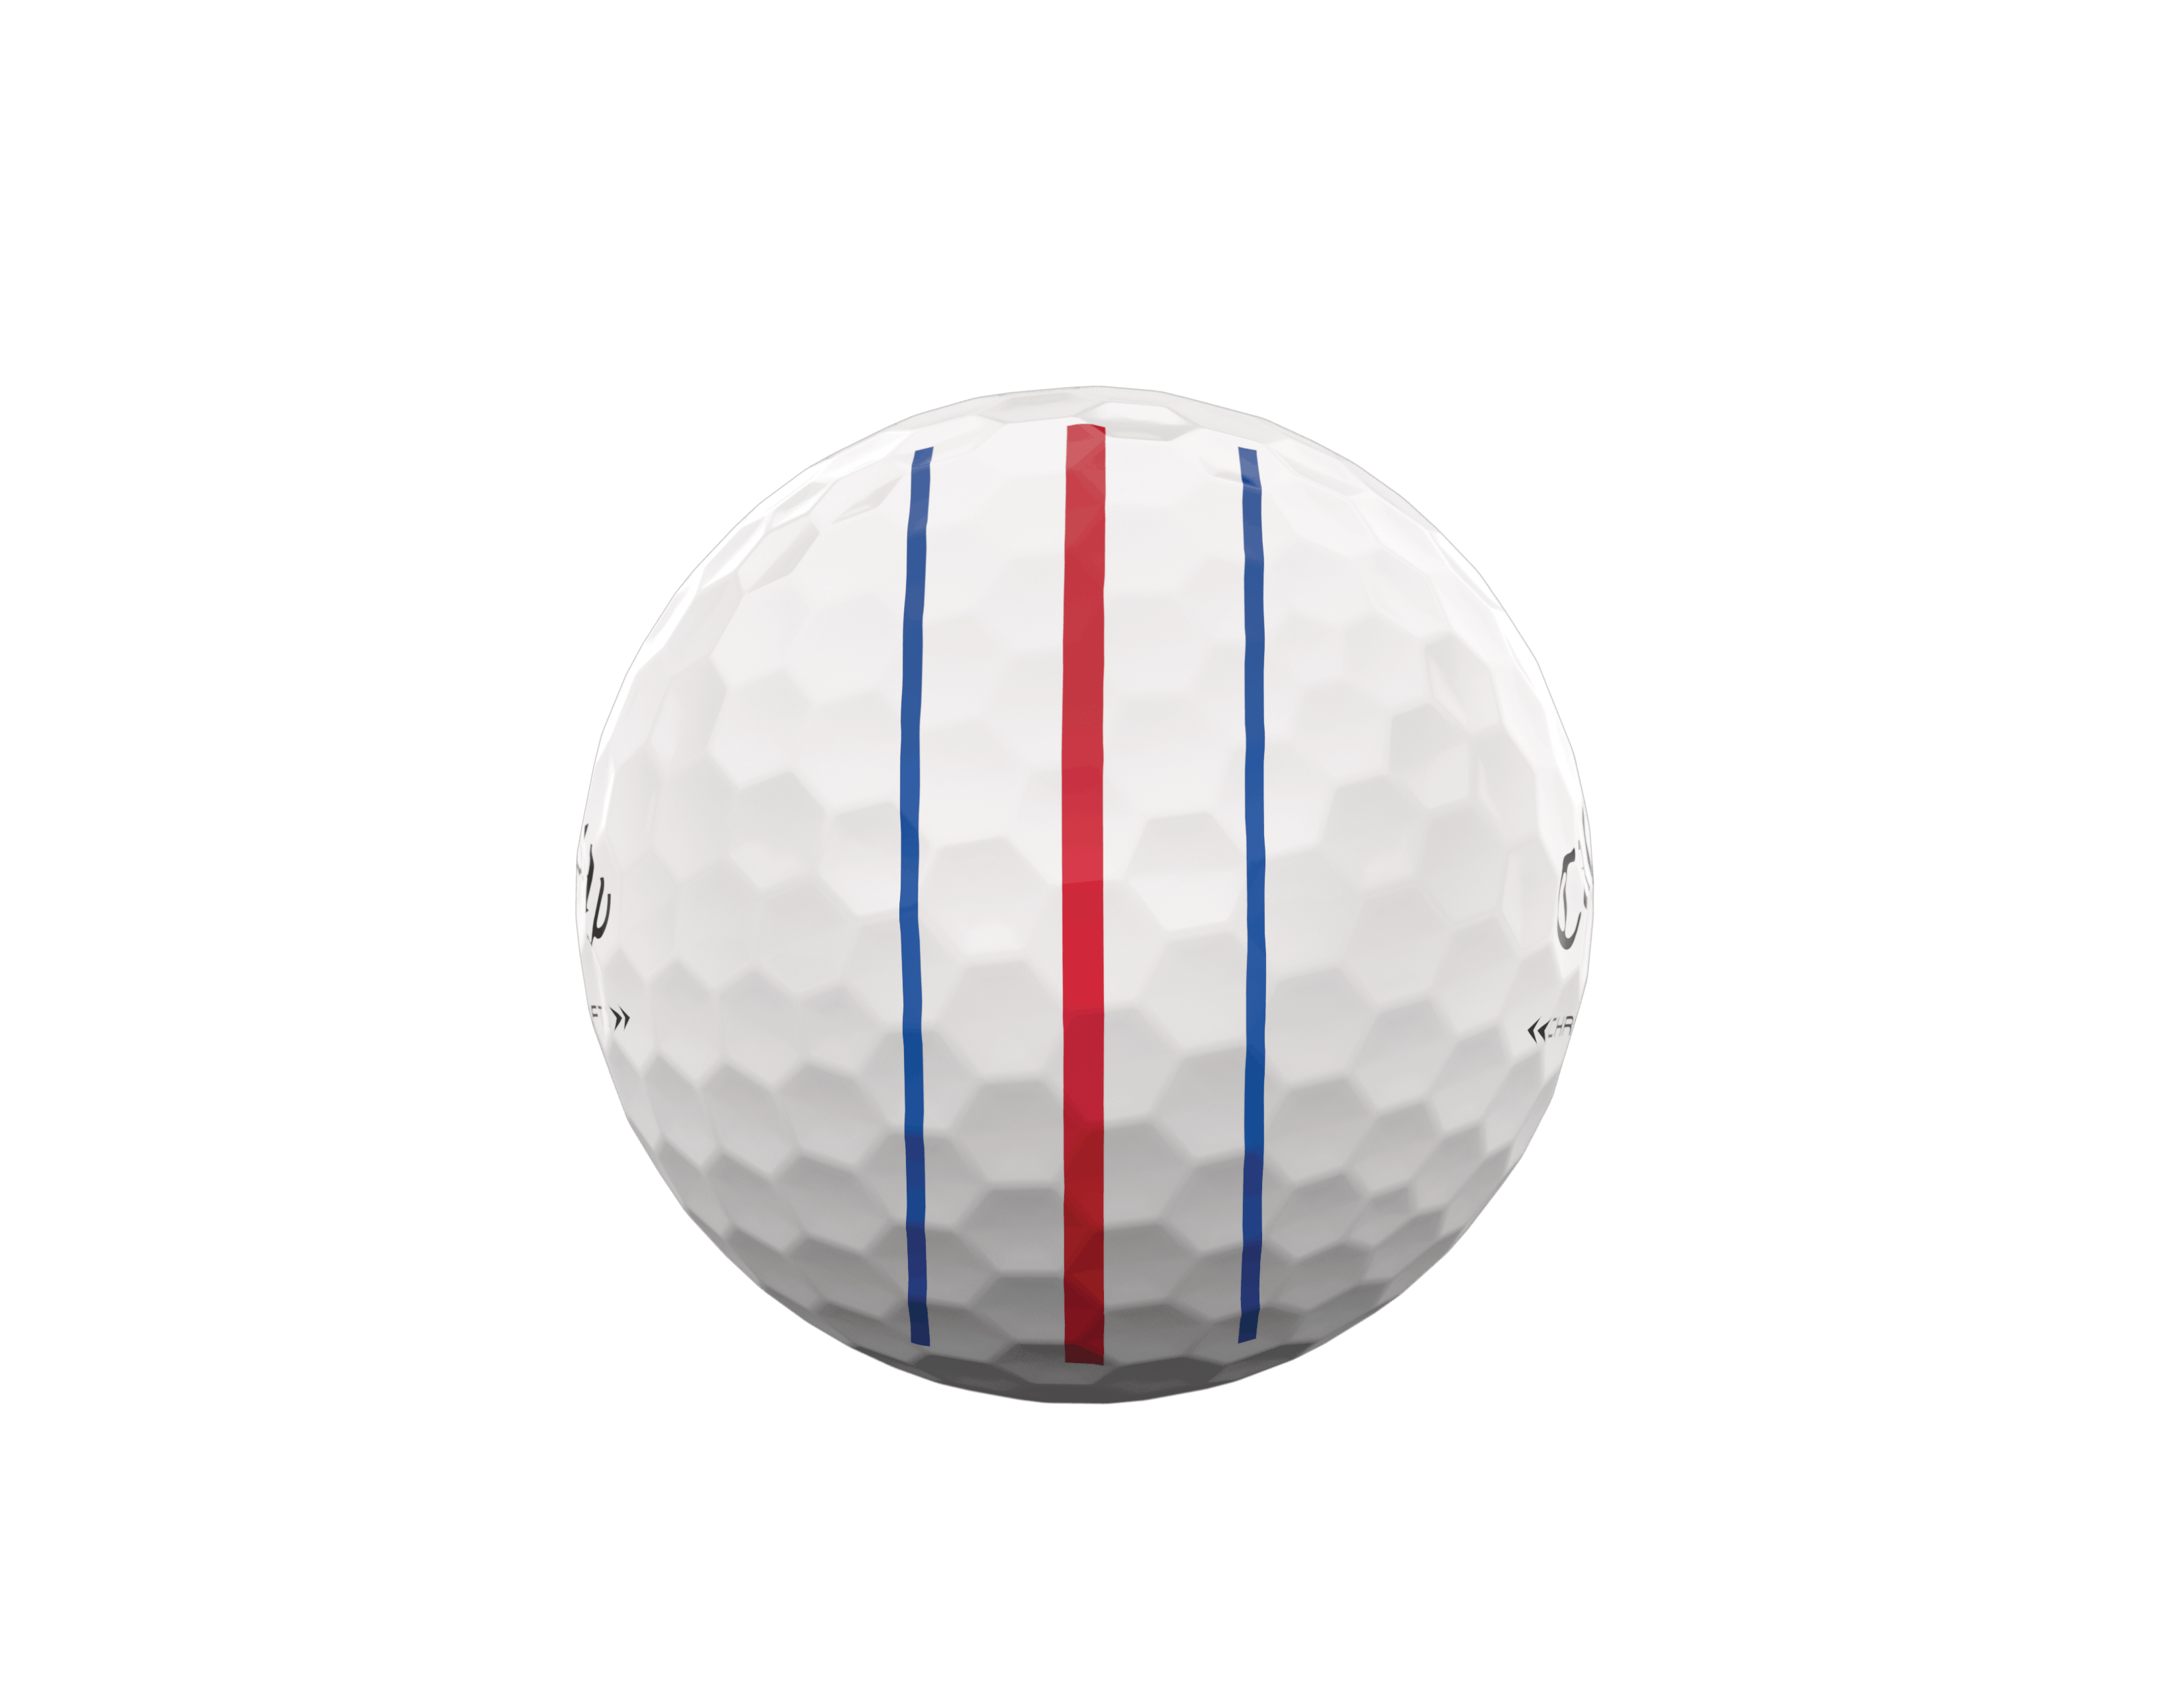 Callaway 2022 Chrome Soft X LS Triple Track Golf Balls · White